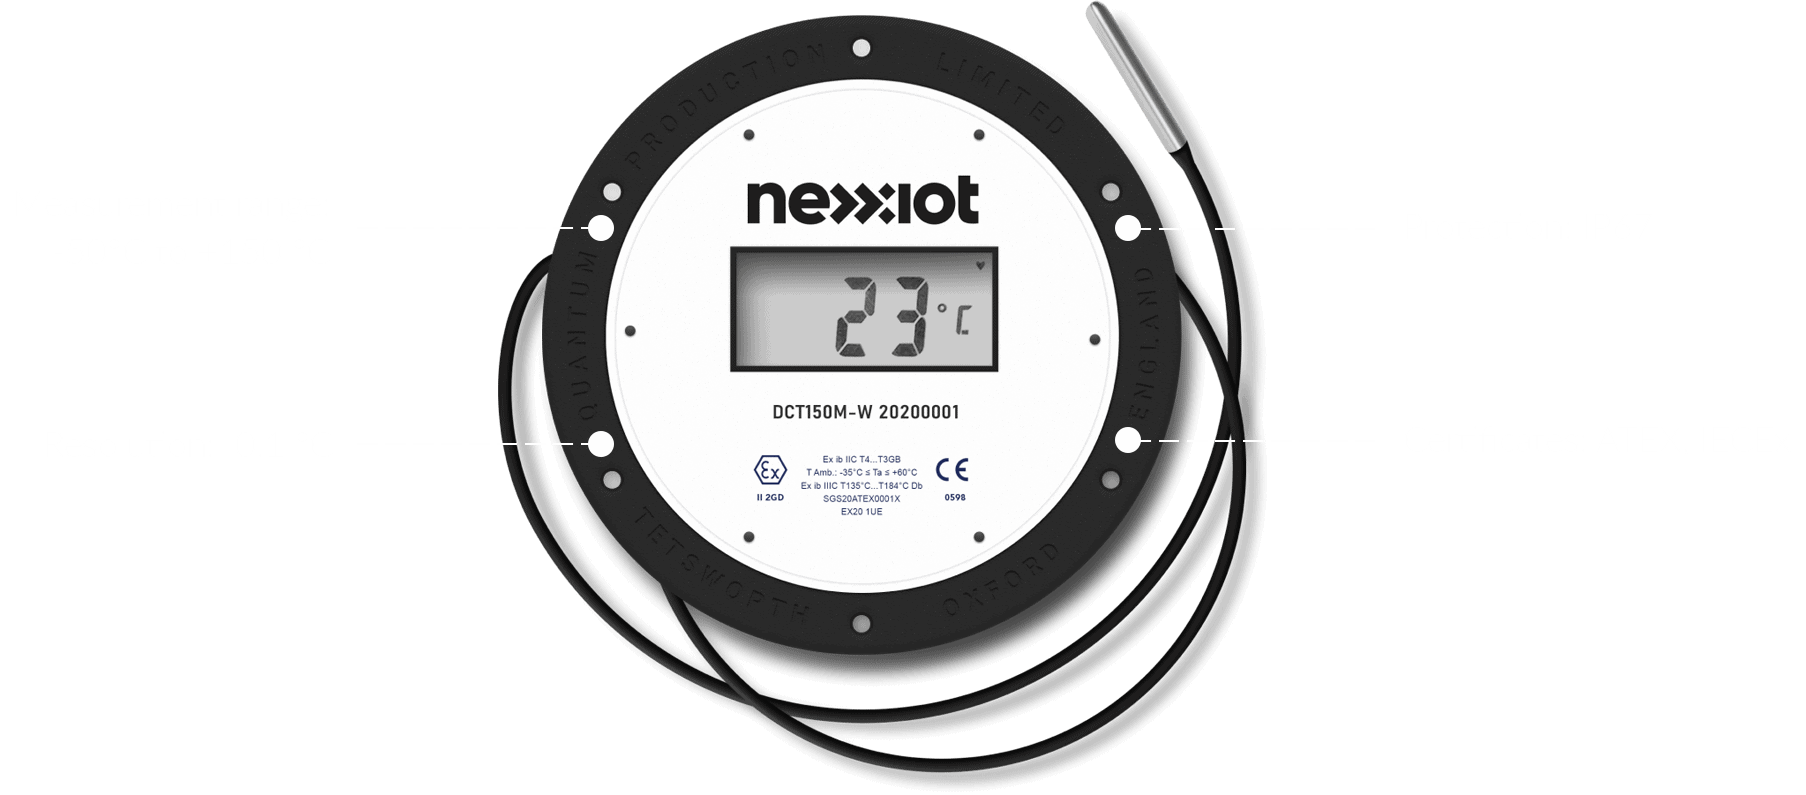 Nexxiot temperature monitor operating parameters